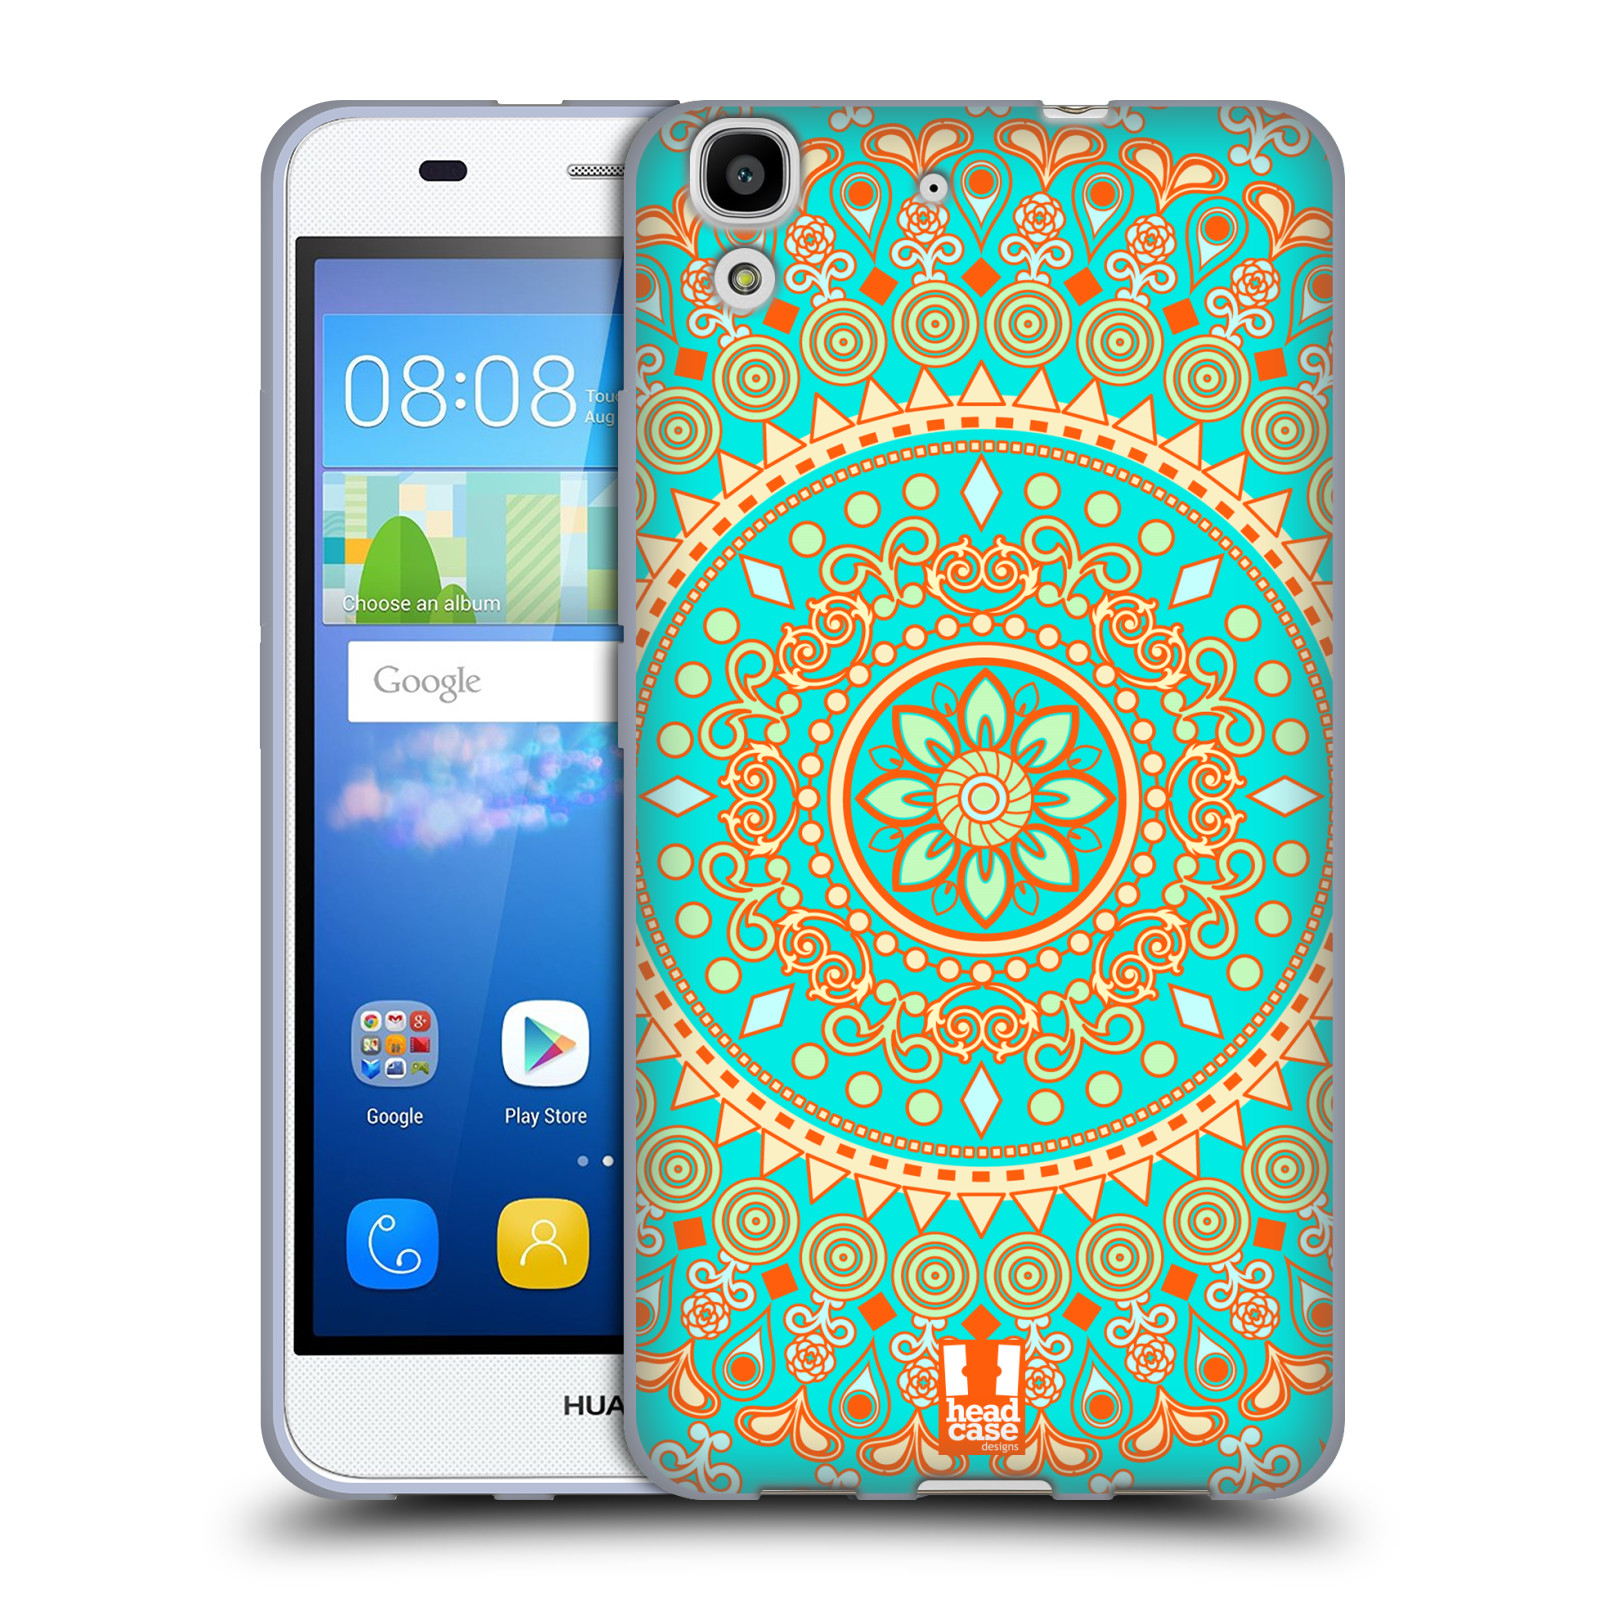 HEAD CASE silikonový obal na mobil HUAWEI Y6 vzor Indie Mandala slunce barevný motiv TYRKYSOVÁ, ZELENÁ